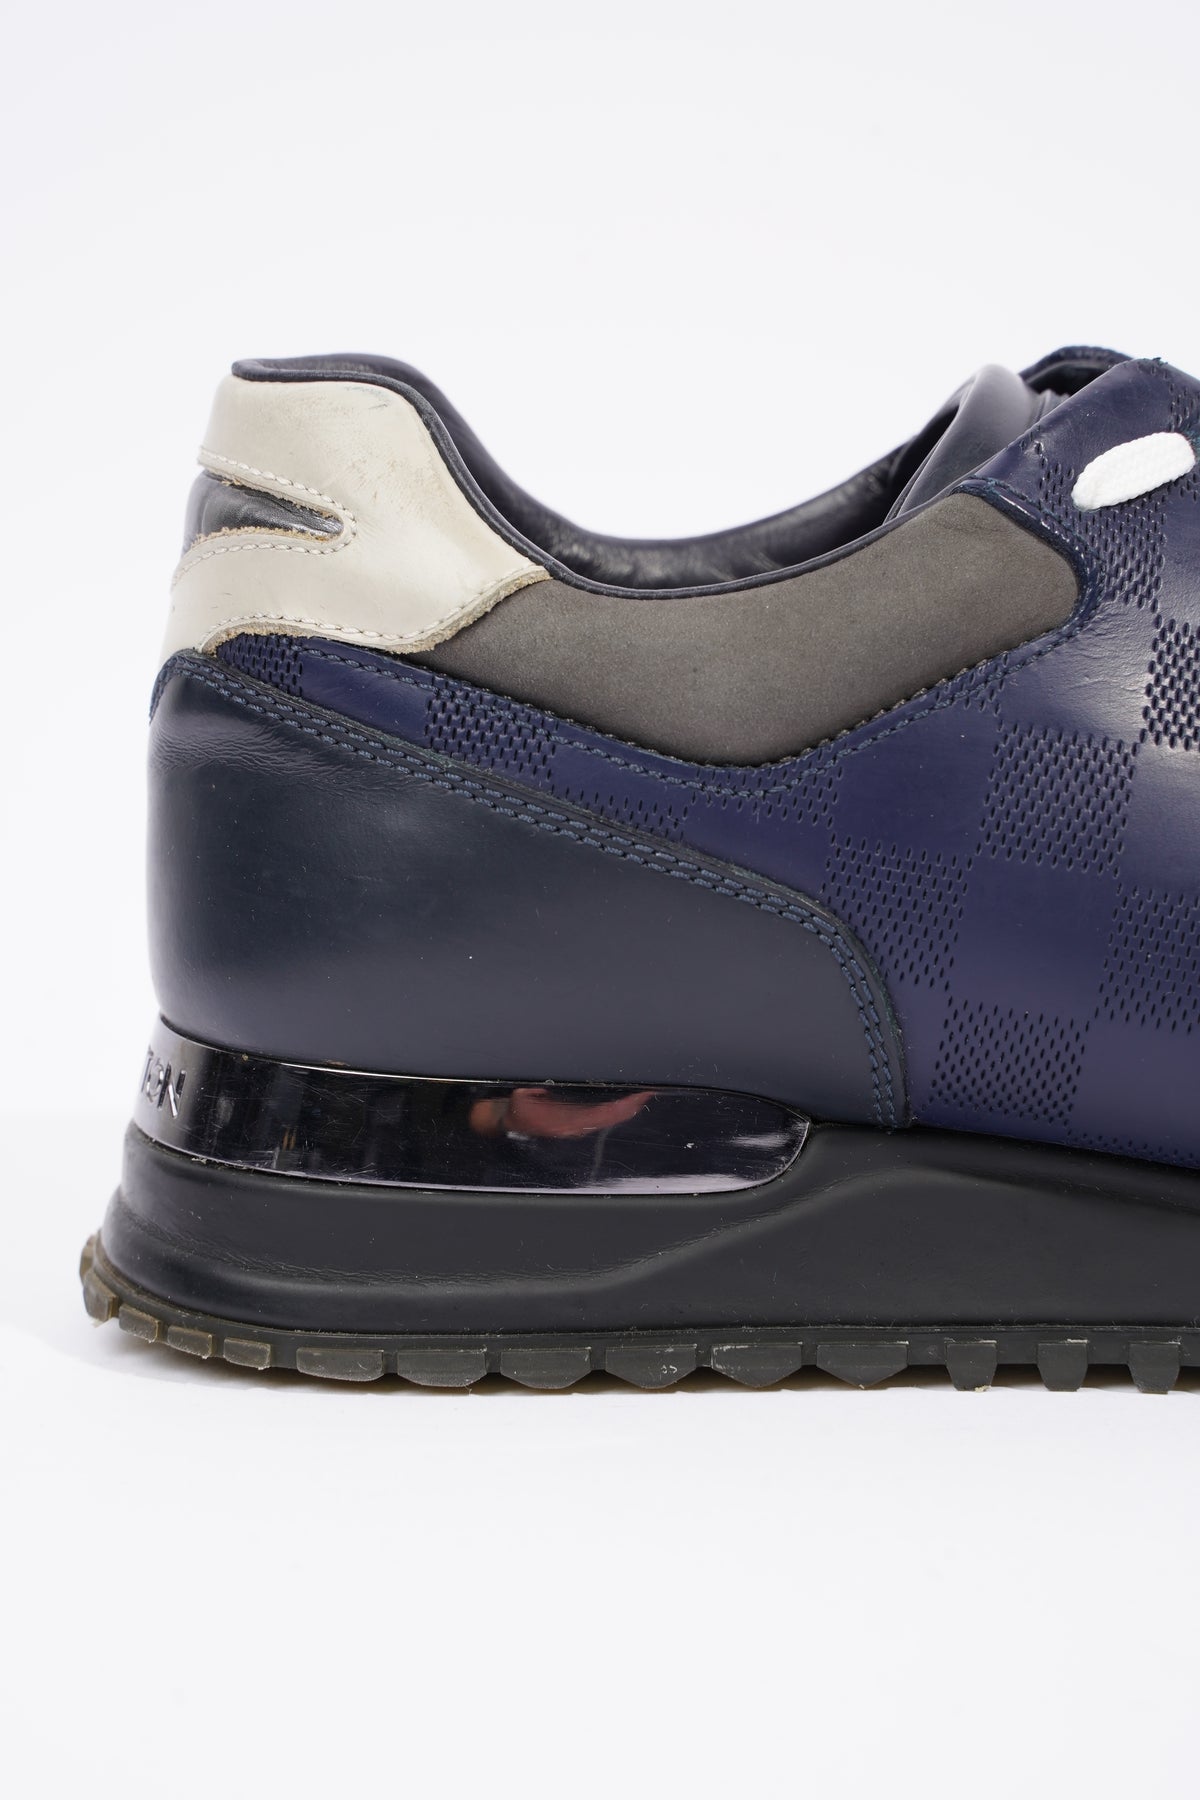 Louis Vuitton Run Away Suede Blue Low Top Sneakers - Sneak in Peace